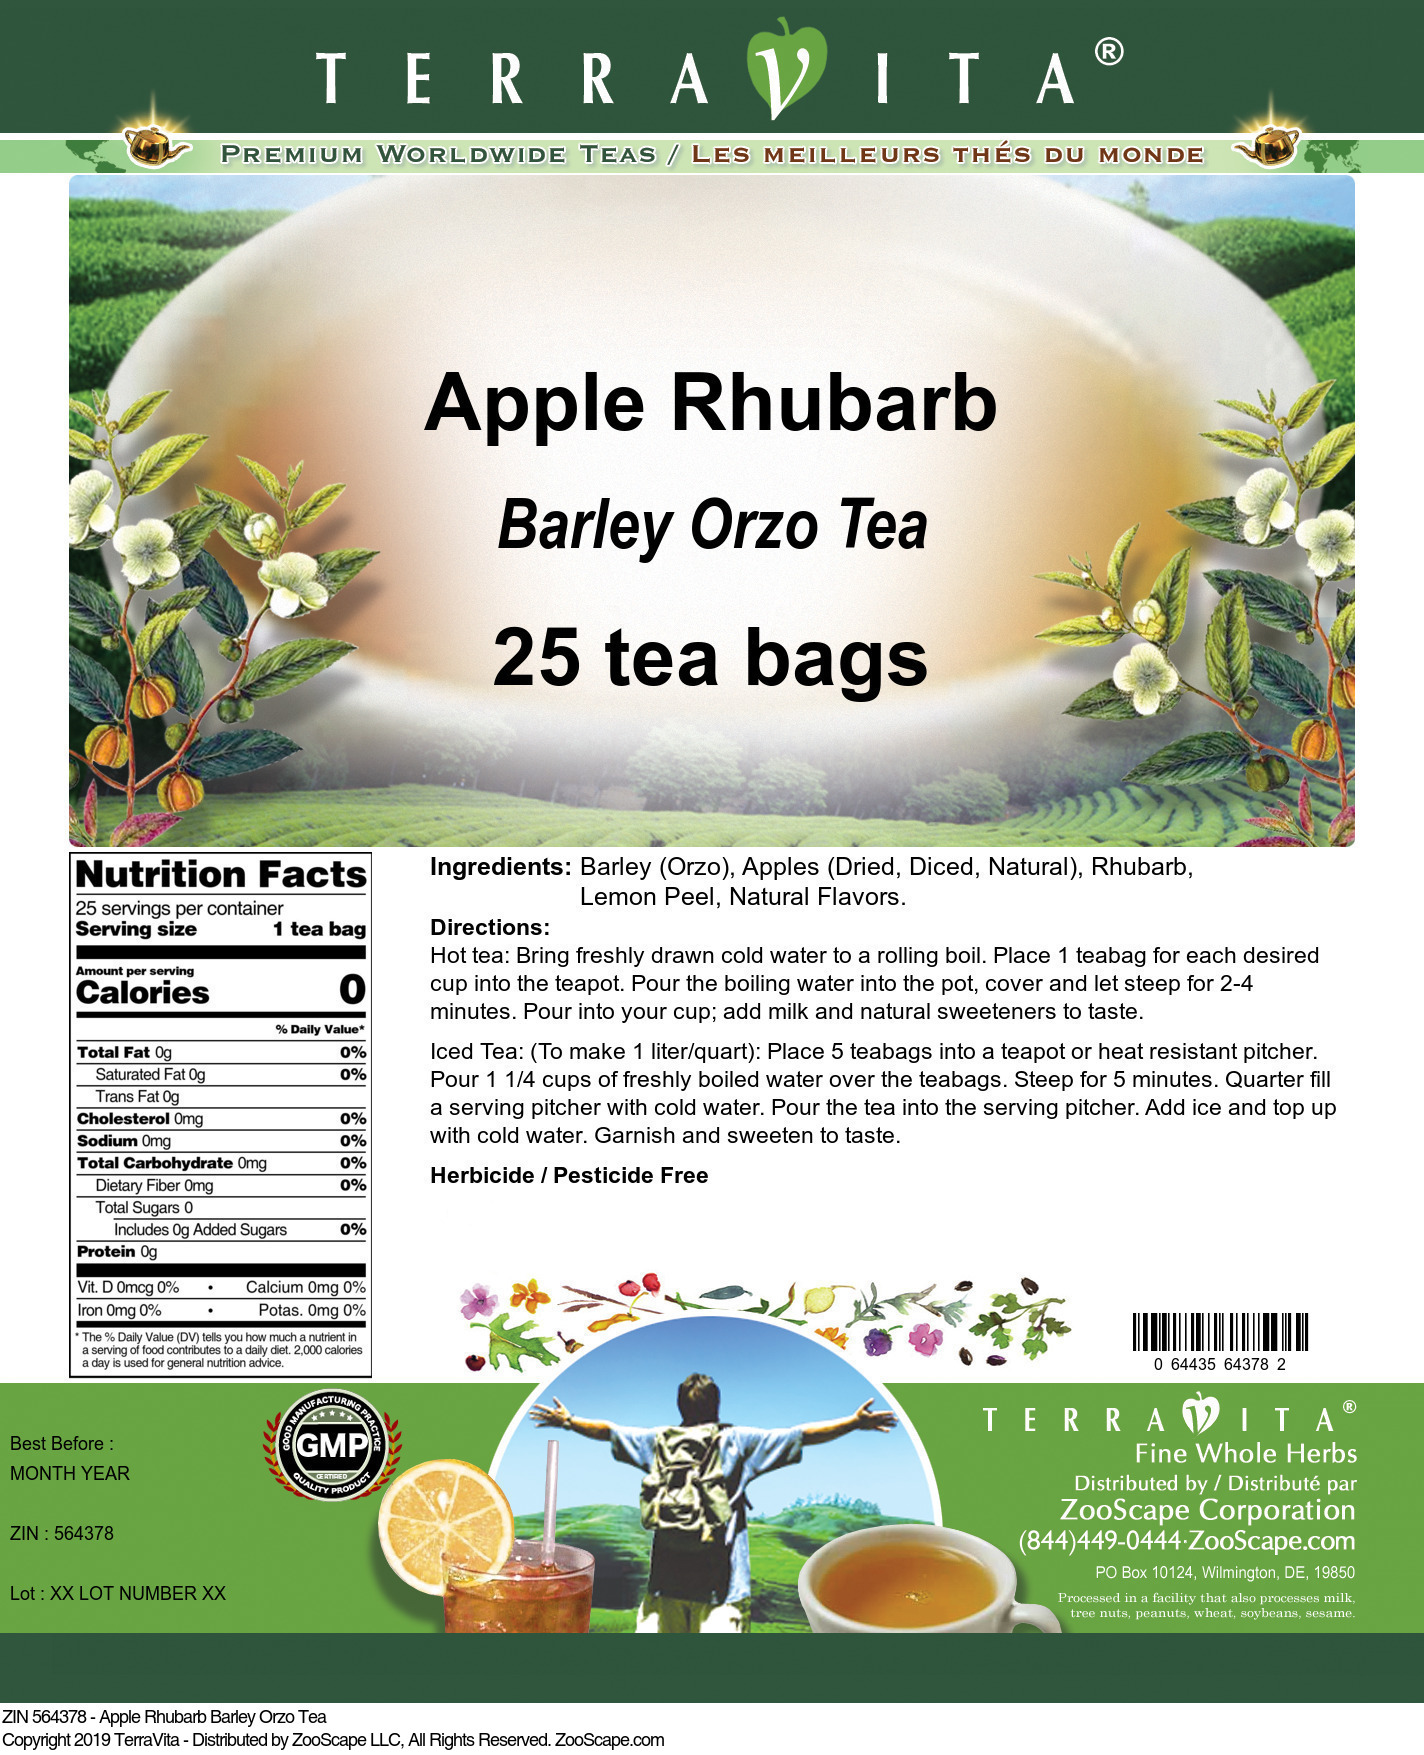 Apple Rhubarb Barley Orzo Tea - Label